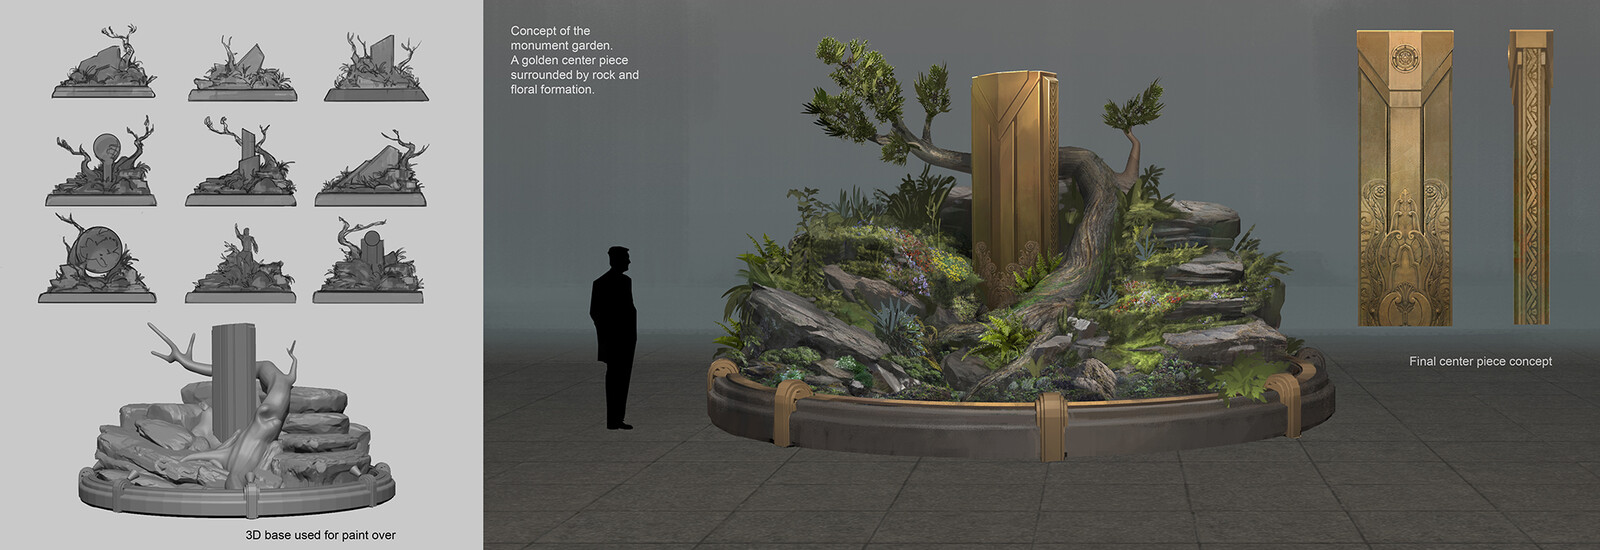 Deep Sea Memorial: Monument concept